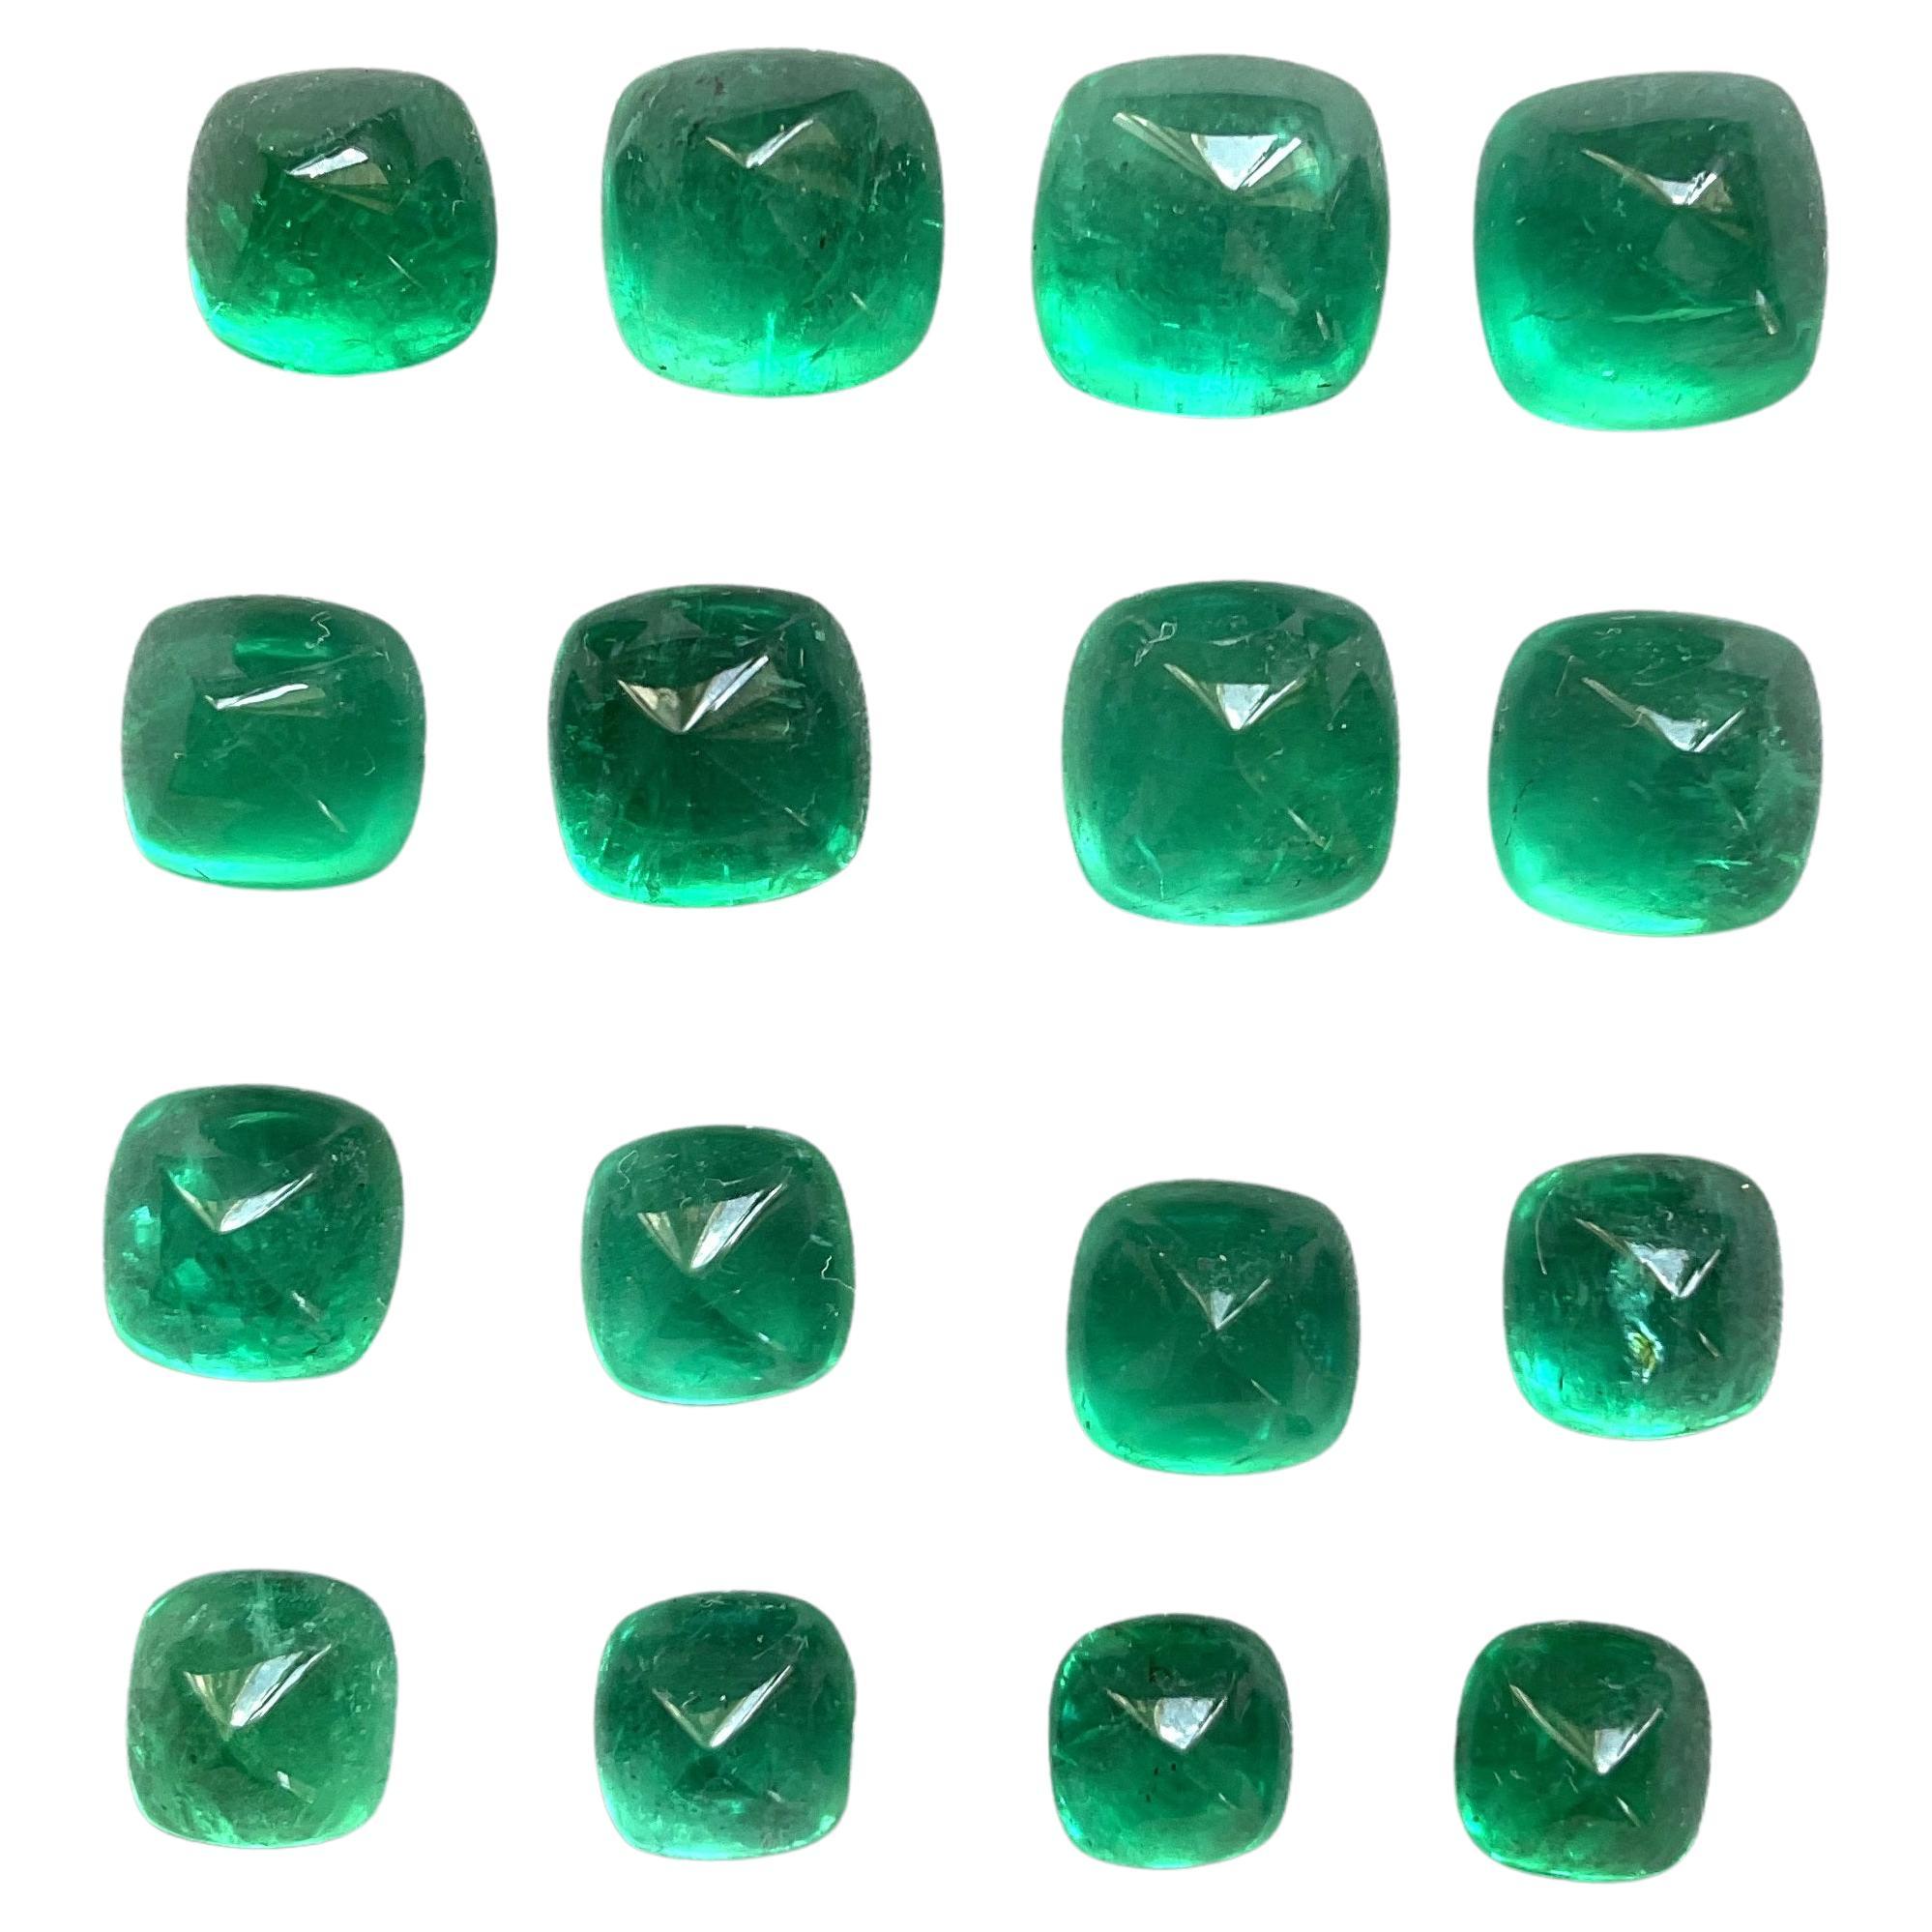 59.30 Carats Zambian Emerald Sugarloaf Cabochon Lot Top Quality Natural Gemstone

Gemstone : Emerald
Weight: 59.30 Carats
Size:  7 To 11 MM
Quantity: 16
Shape: Sugarloaf